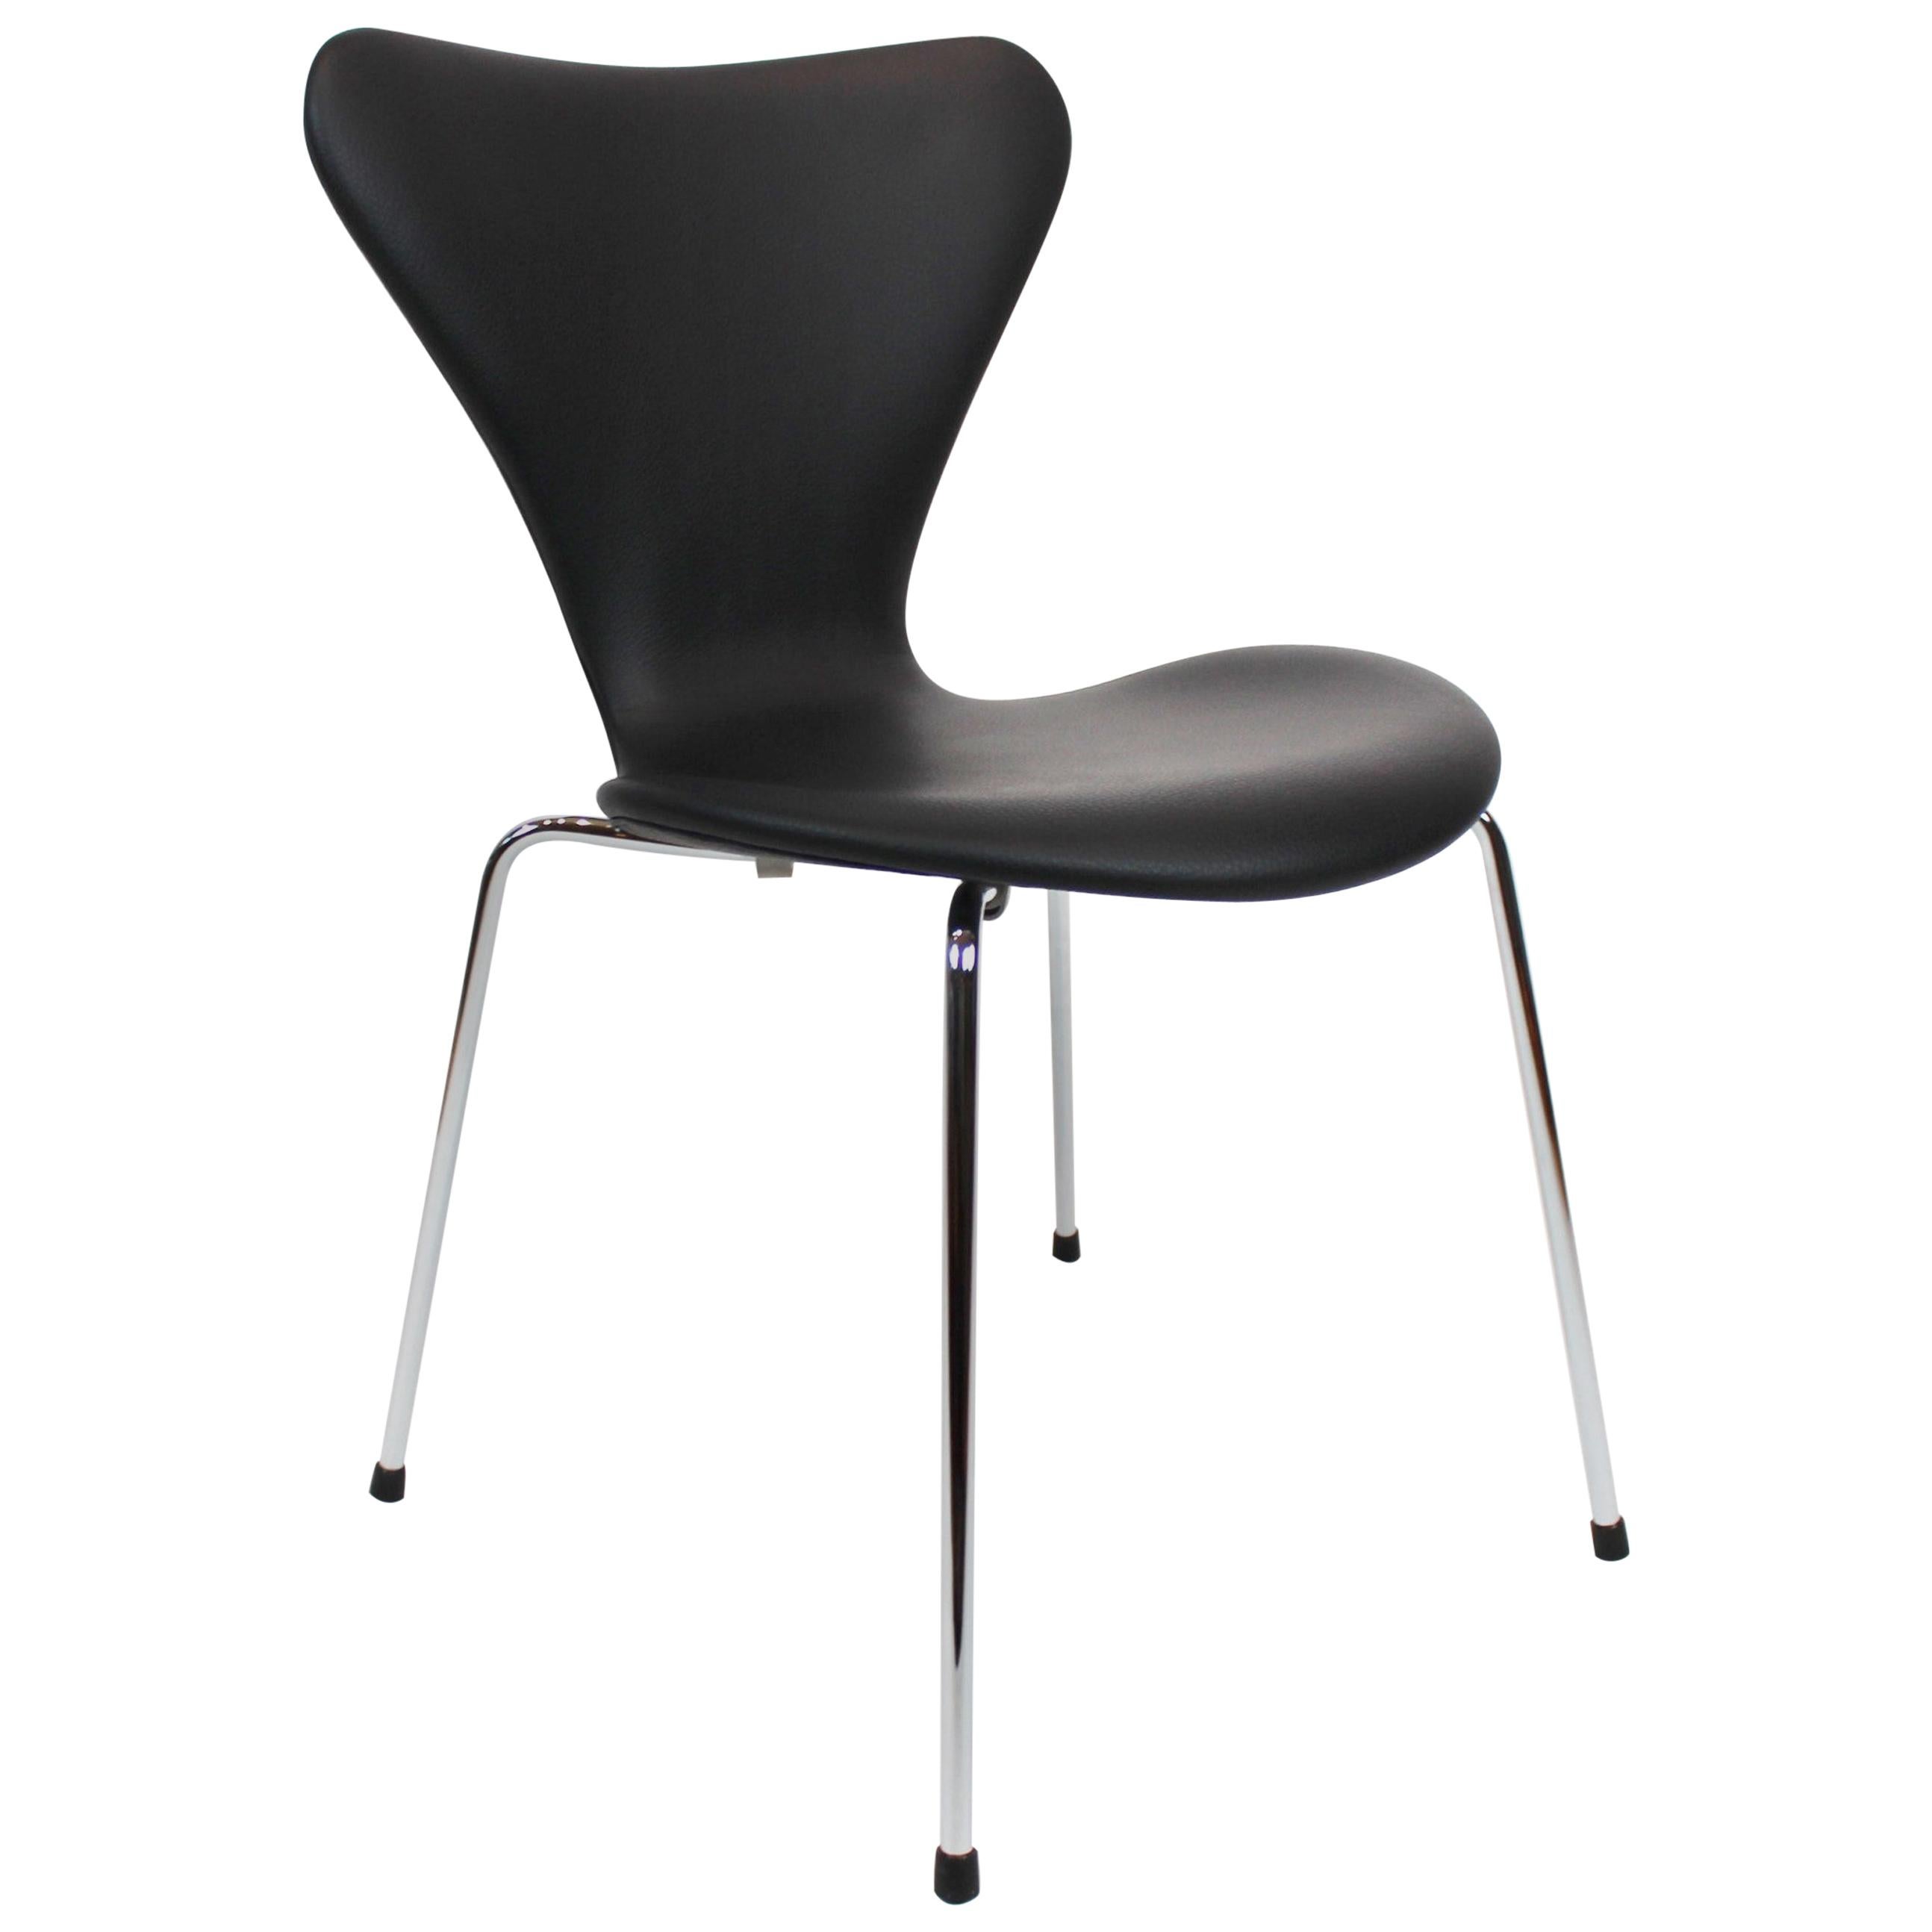 Arne Jacobsen Series 7 Chairs by Fritz Hansen, Black Leather, Model 3107